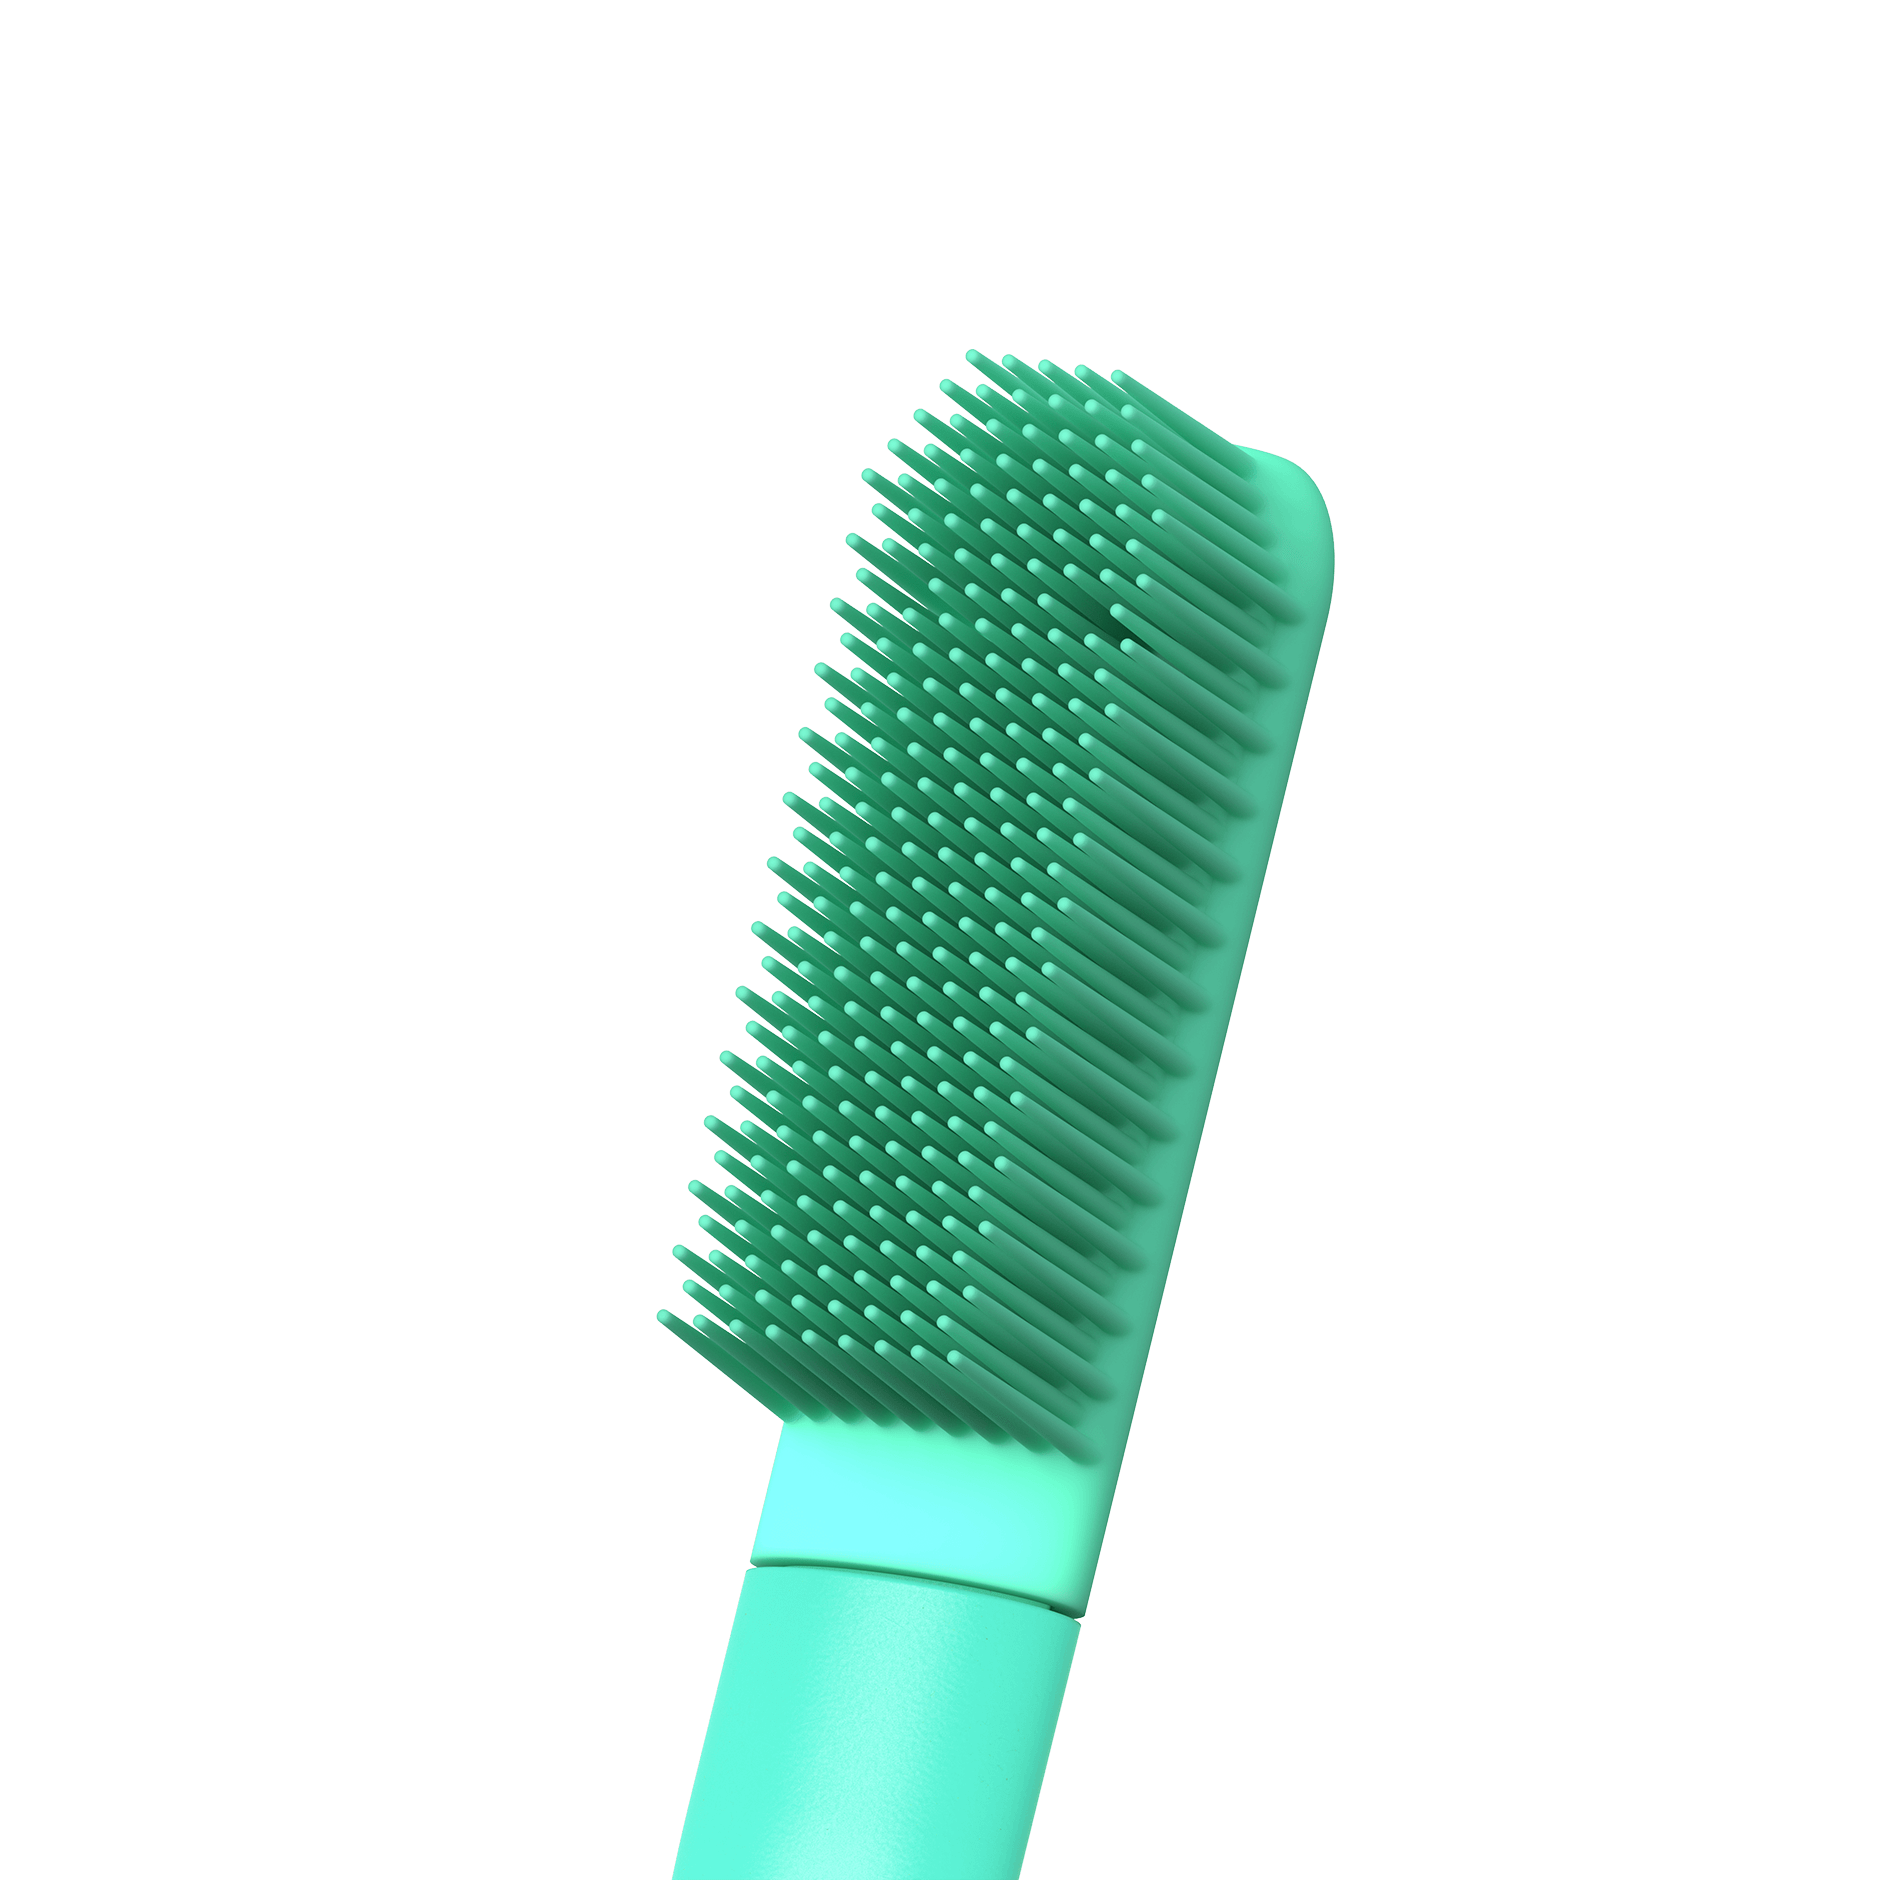 Original Toothbrush in Mint